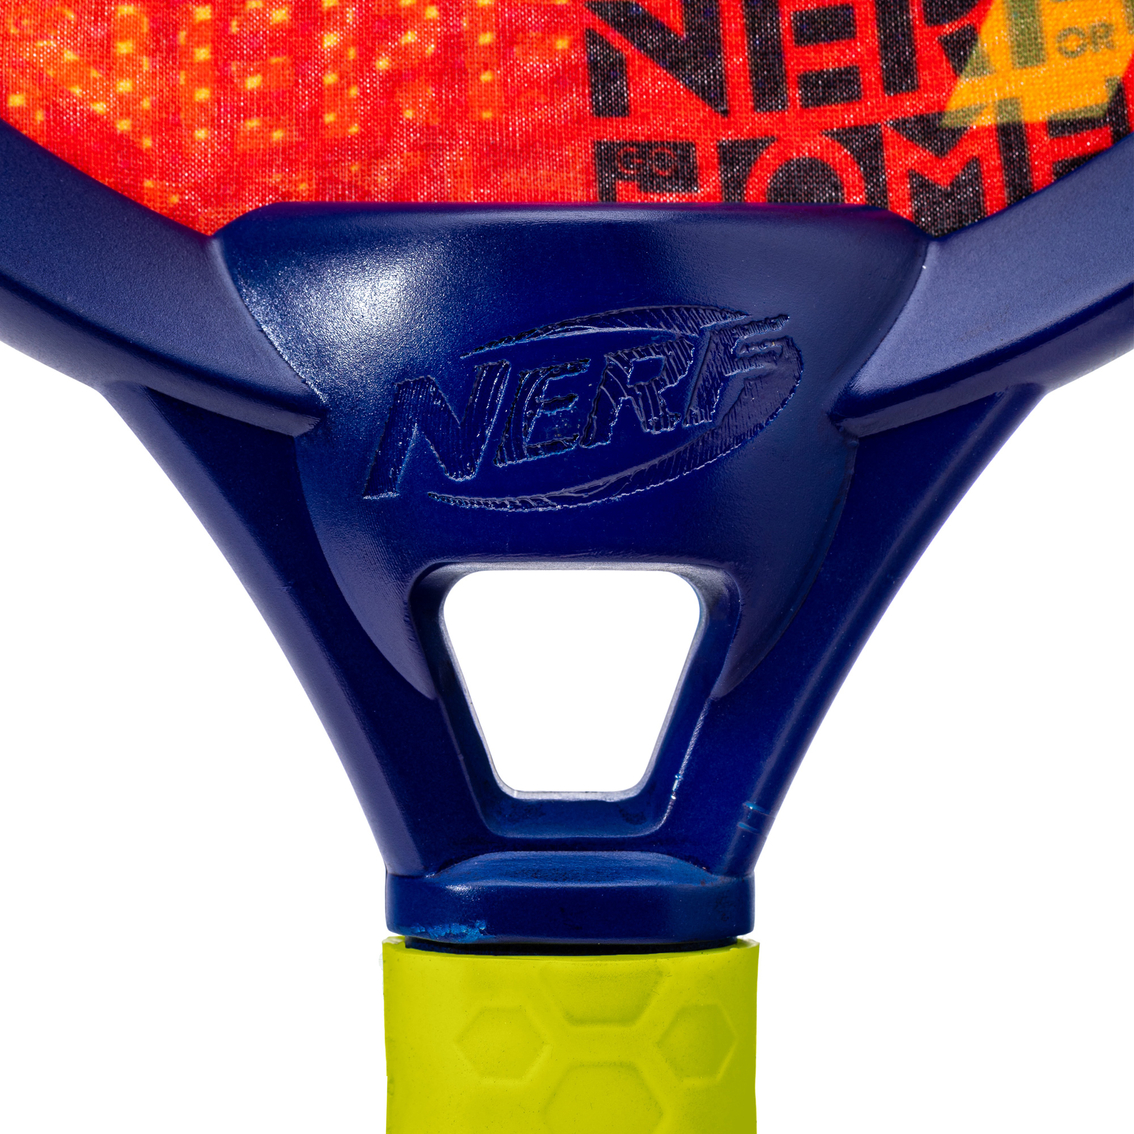 Nerf 2 Player Tennis Set - Image 3 of 6